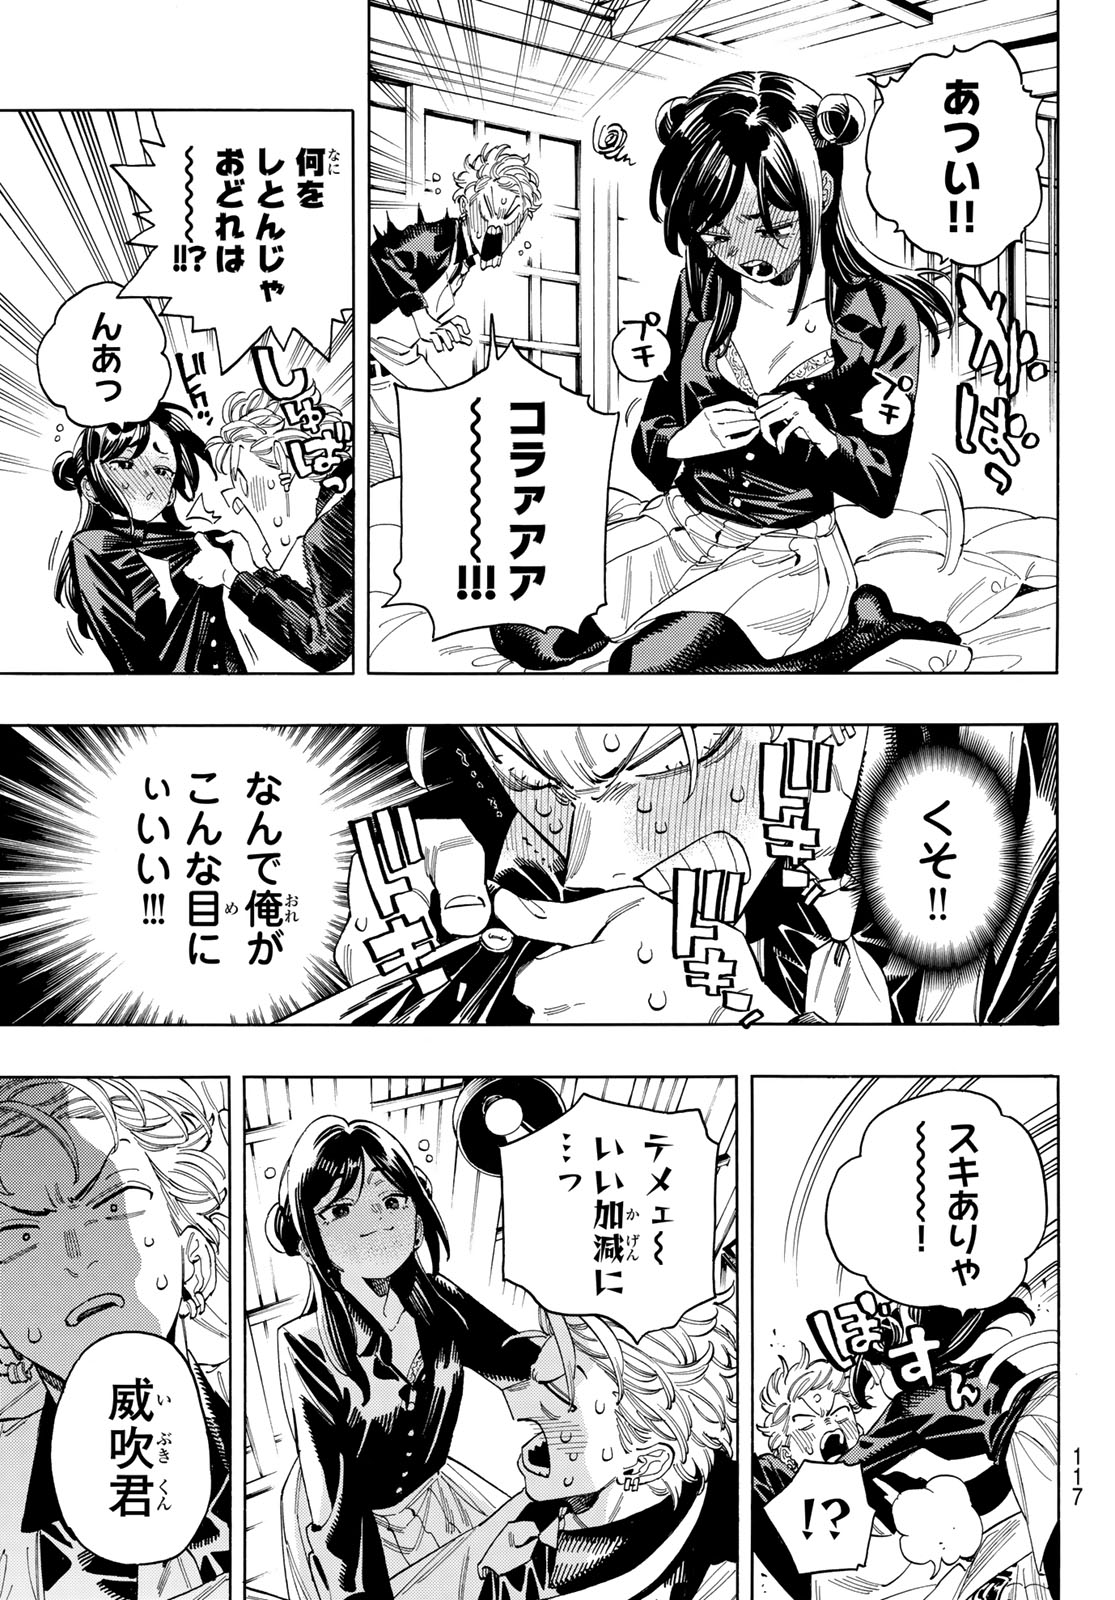 Akabane Honeko no Bodyguard - Chapter 87 - Page 6